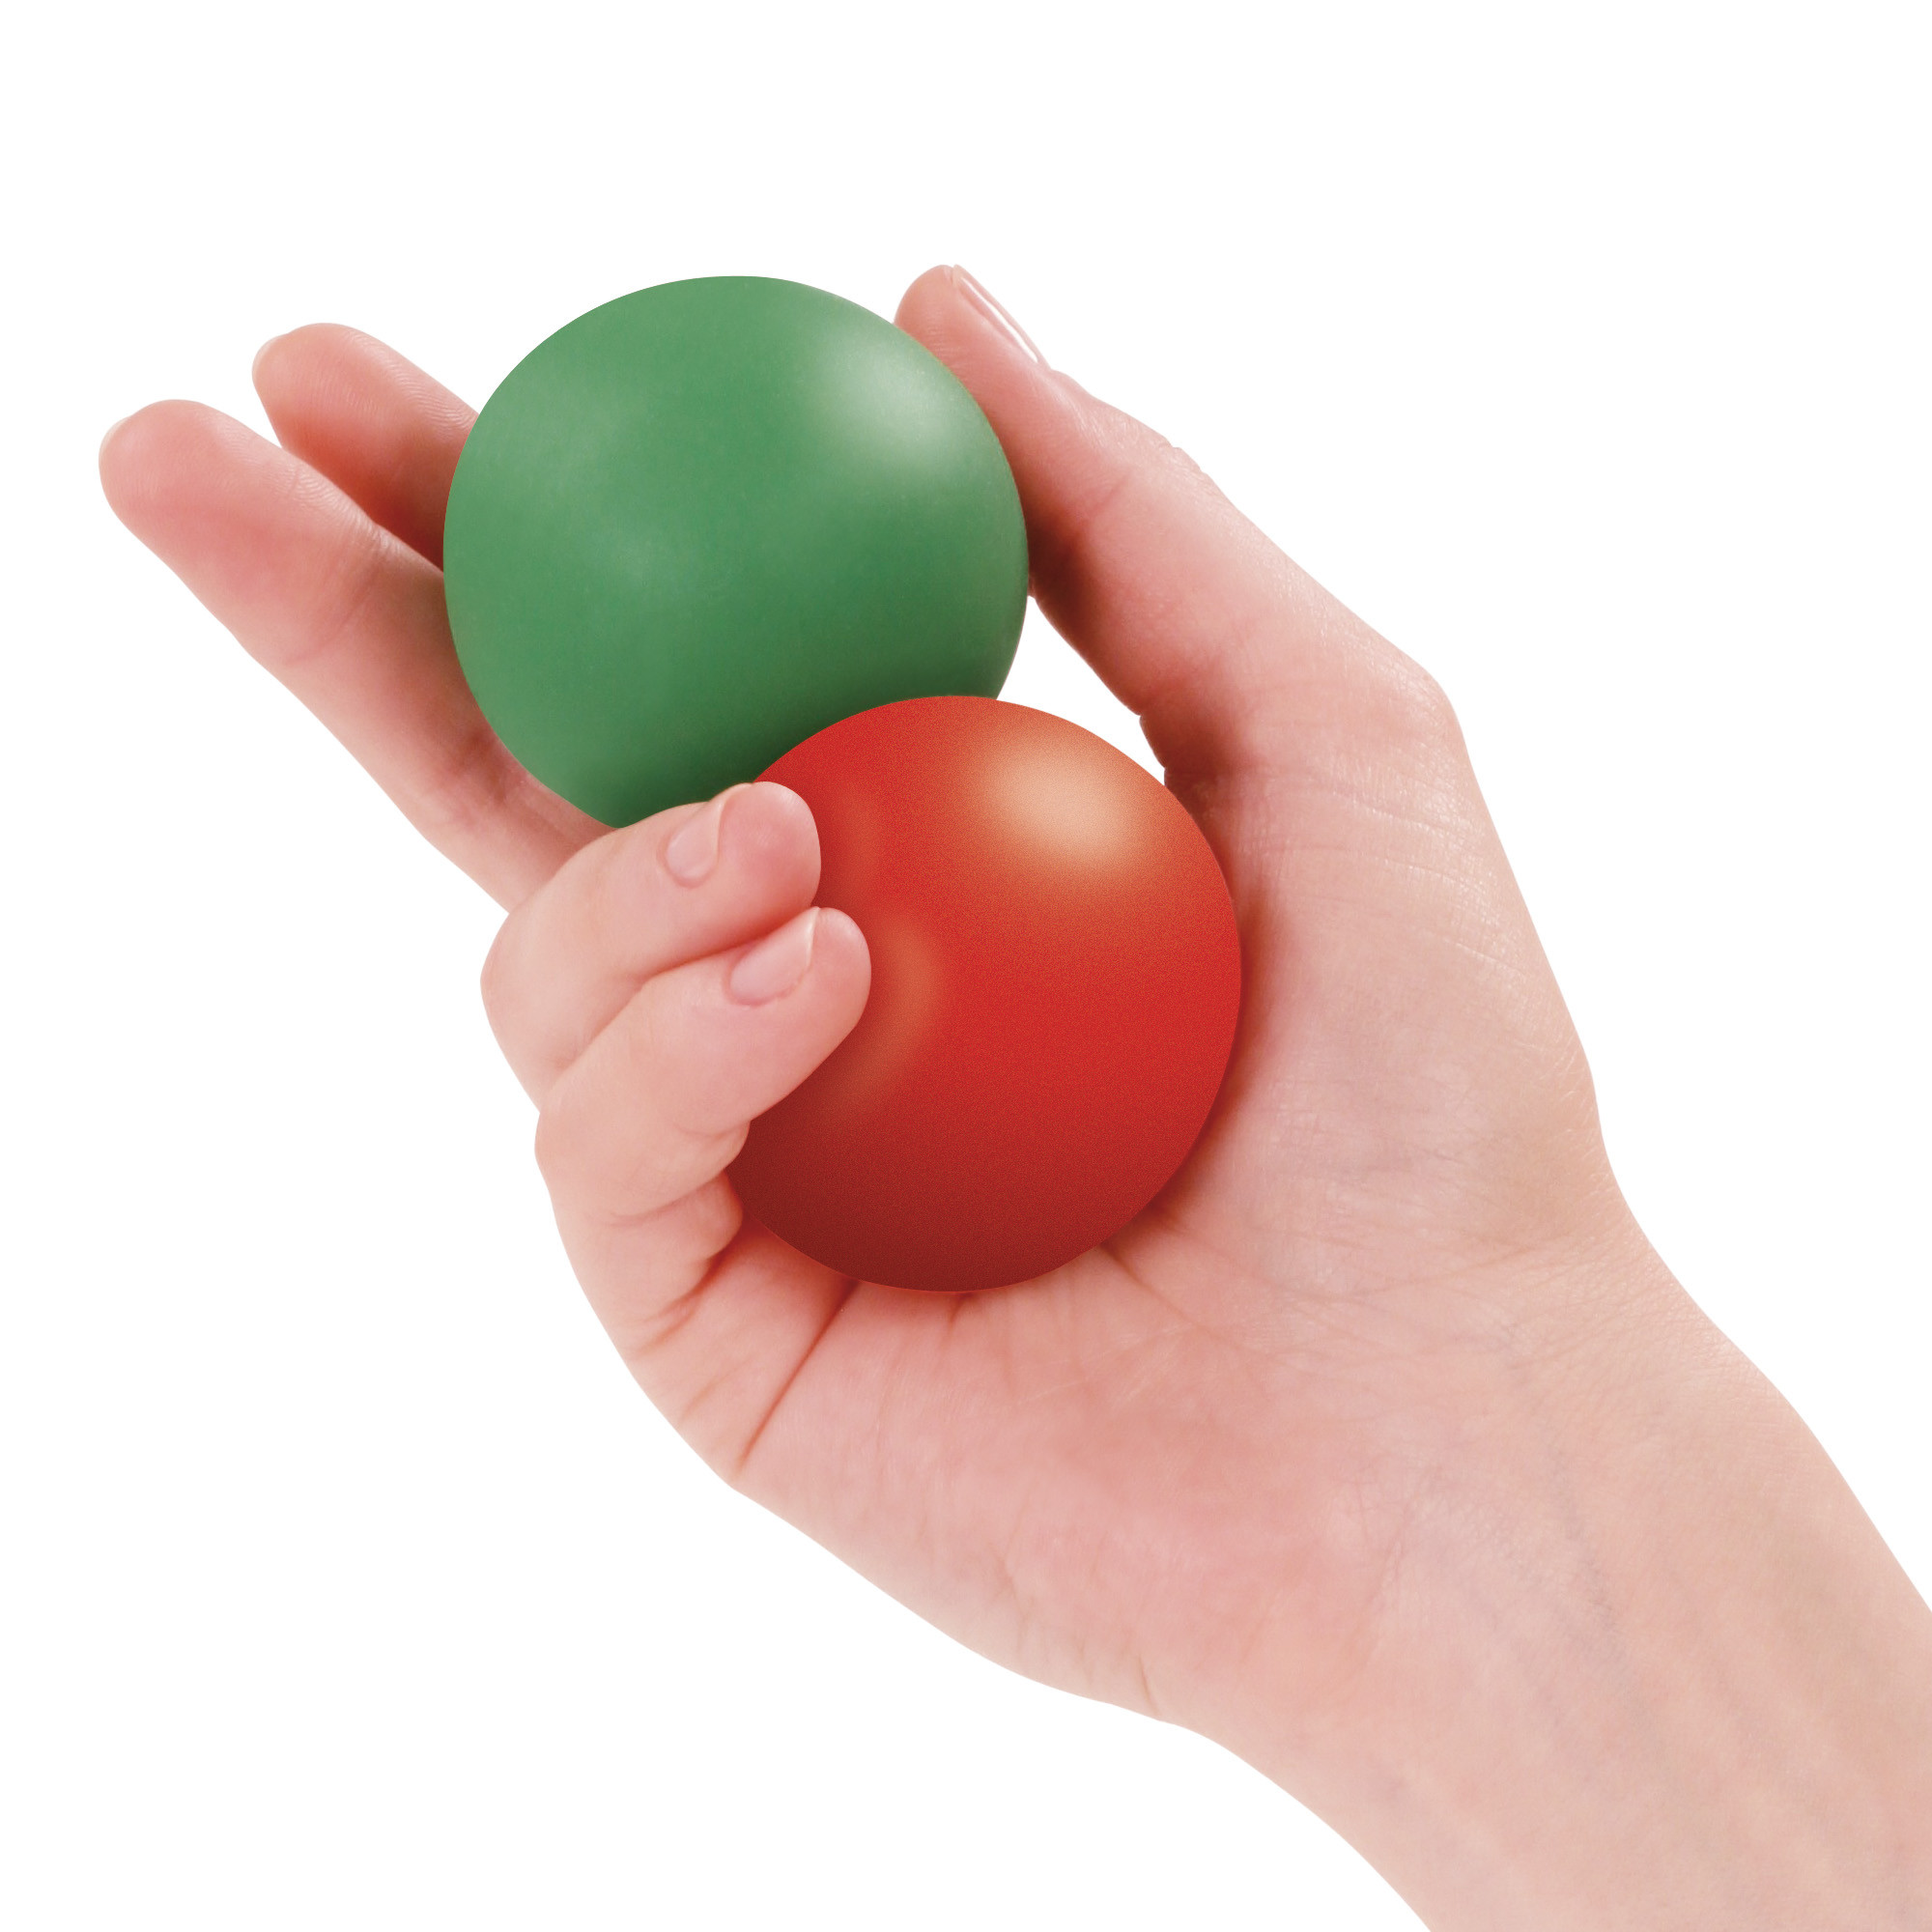 Aktiv-Ball-Display - Anti-Stress-Ball, der die Handmuskeln trainiert 9 Stück